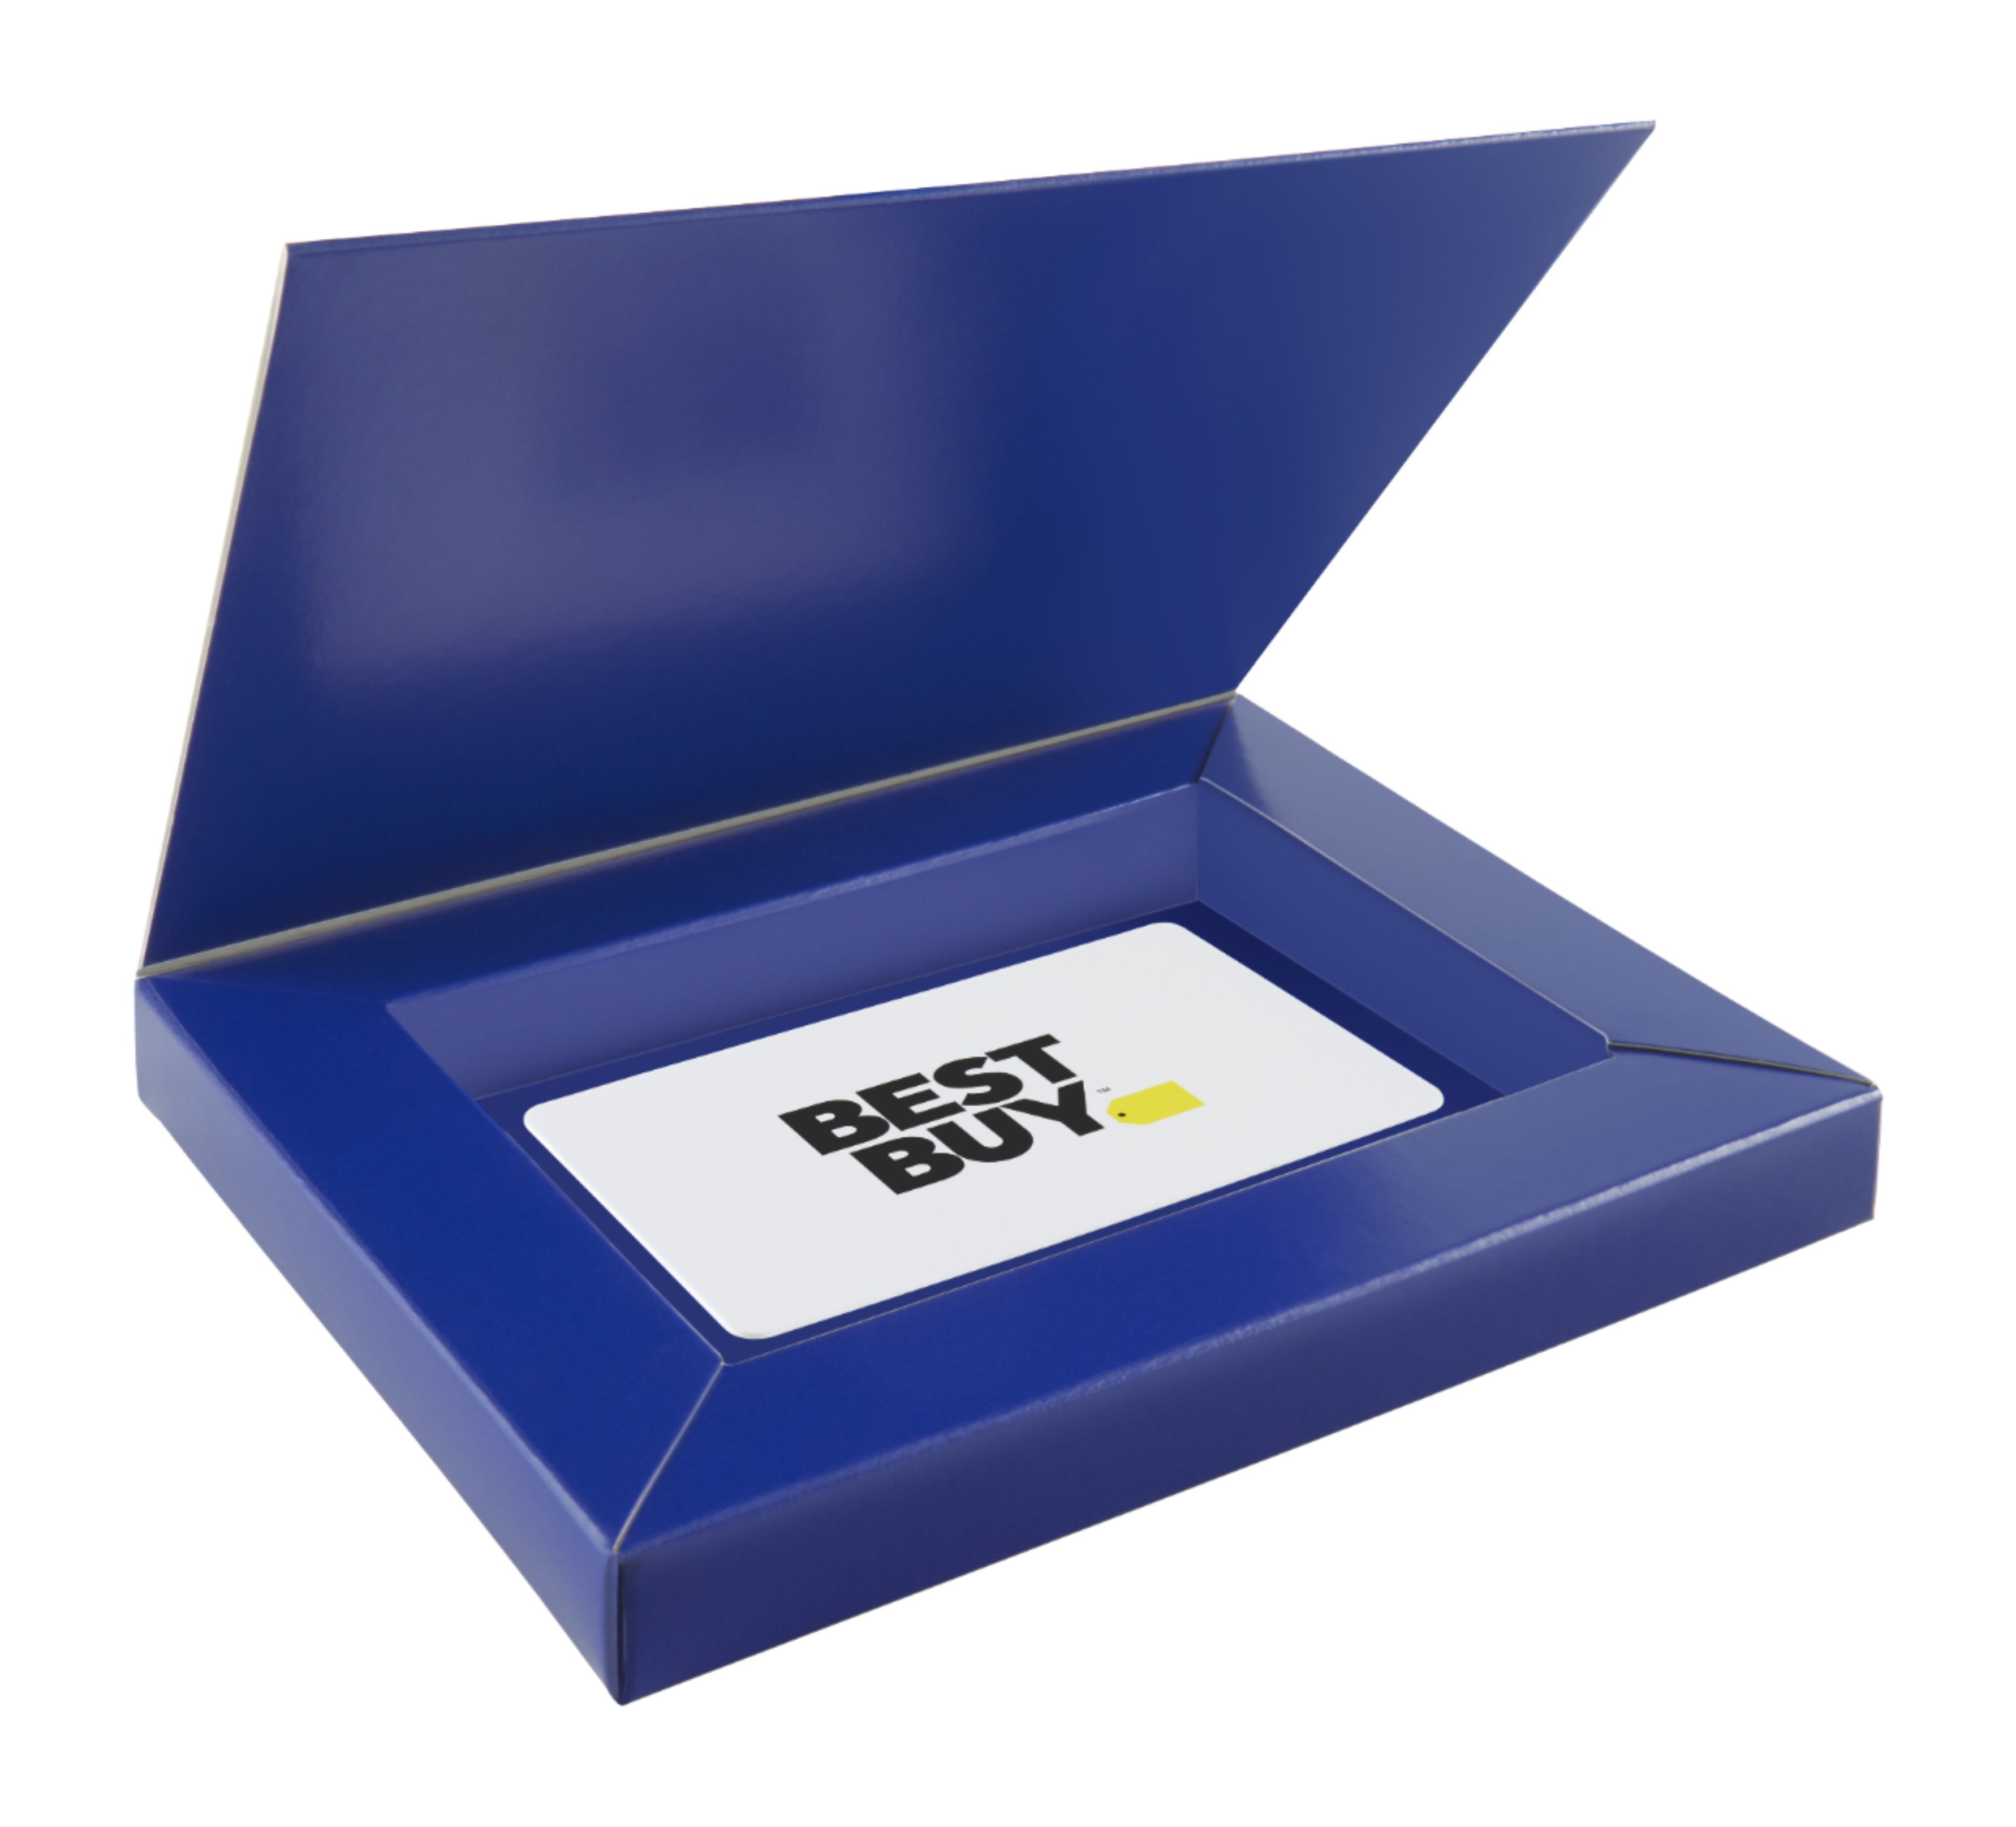 Best Buy® $25 Best Buy Gift Card with Gift Box 6300272 - Best Buy